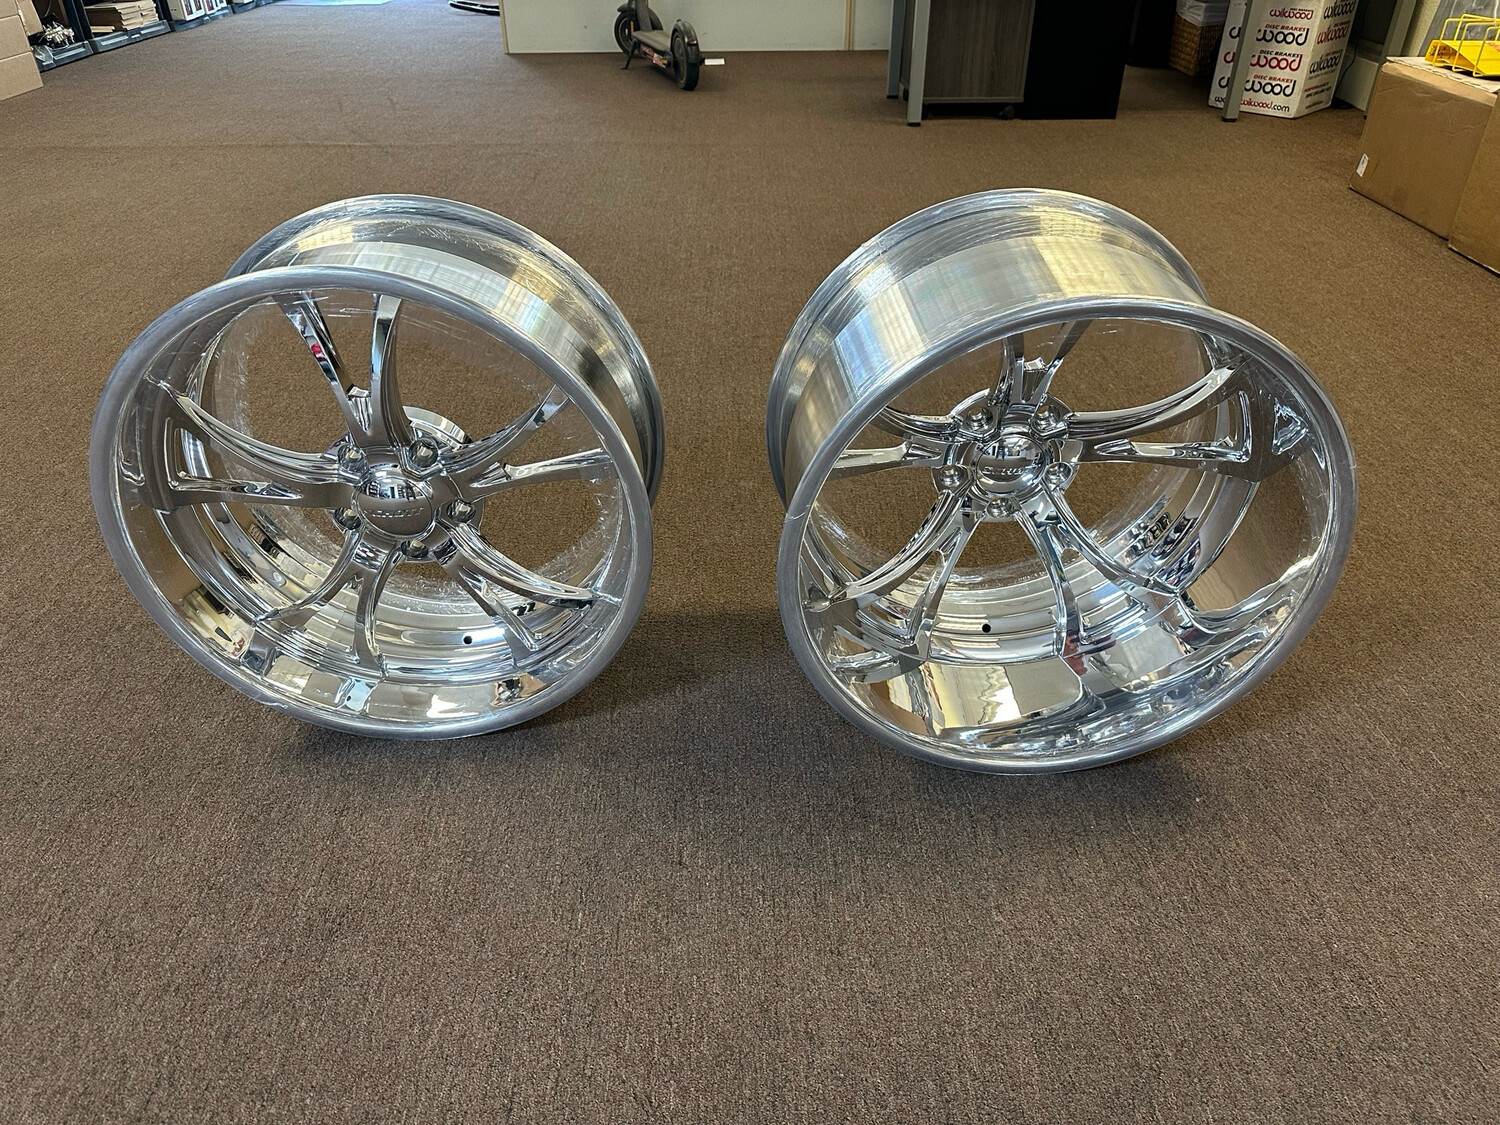 Schott Tomahawk Exl Wheels. 20x9 and 20x10.